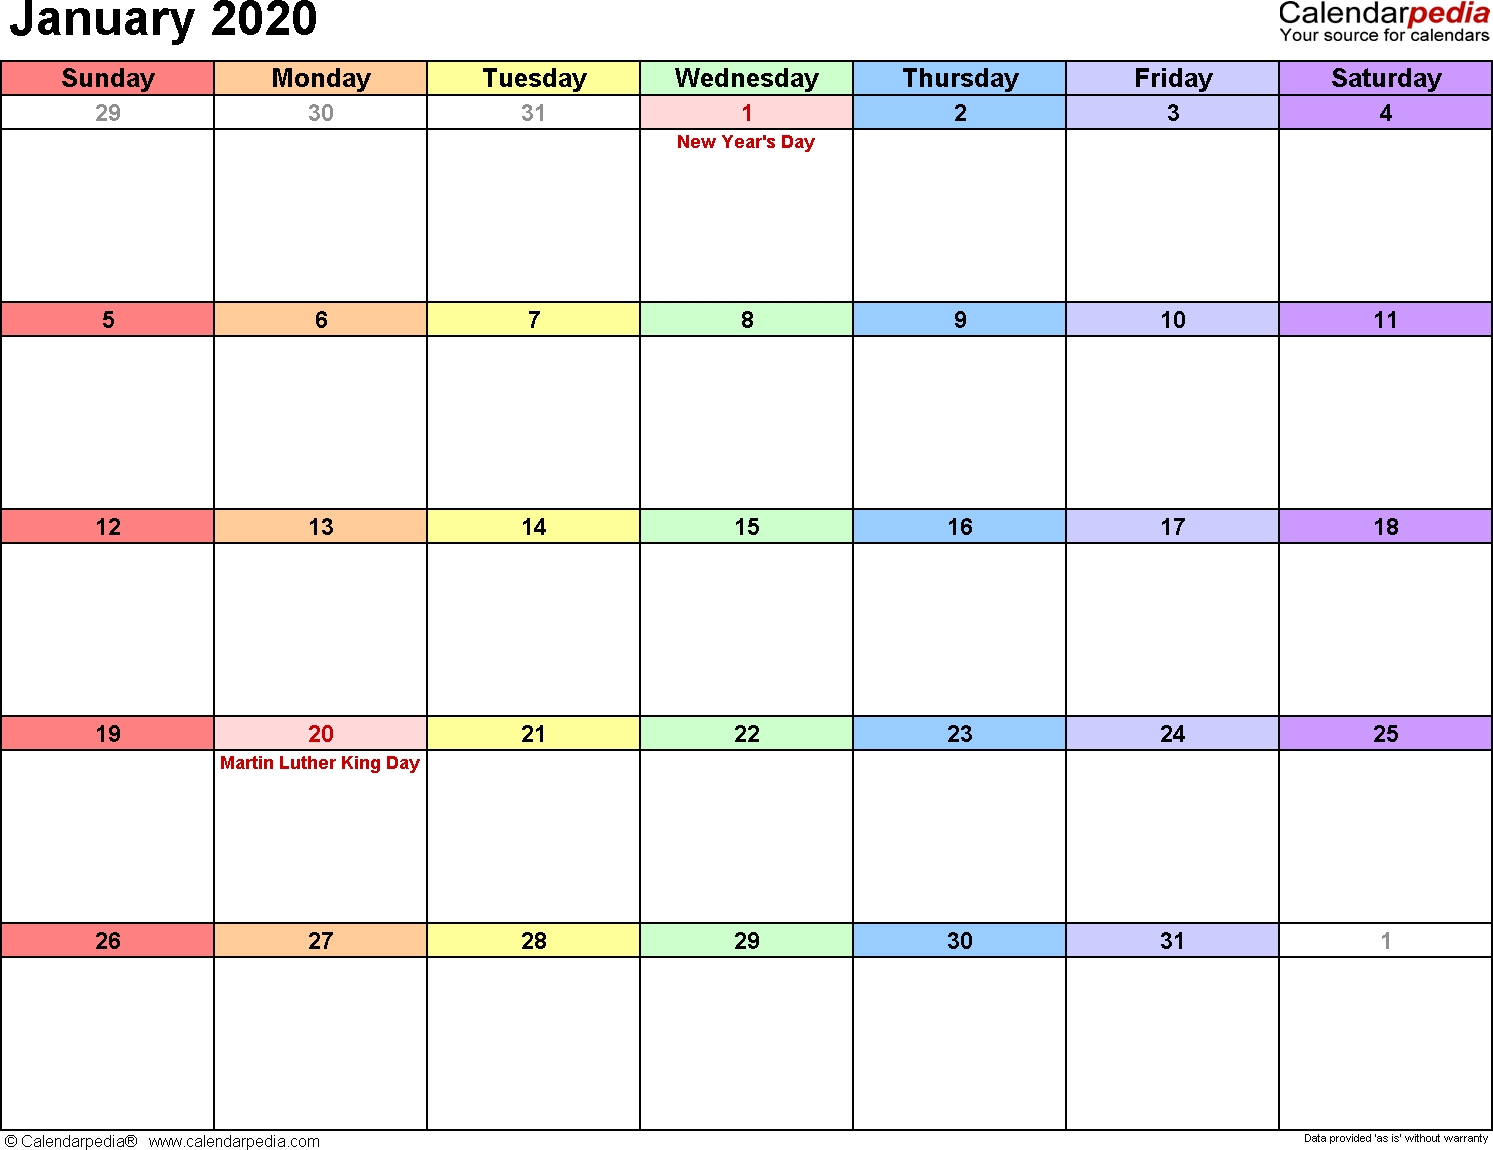 Calendarpedia - Your Source For Calendars Incredible Calendarpedia 2020 For South Africa